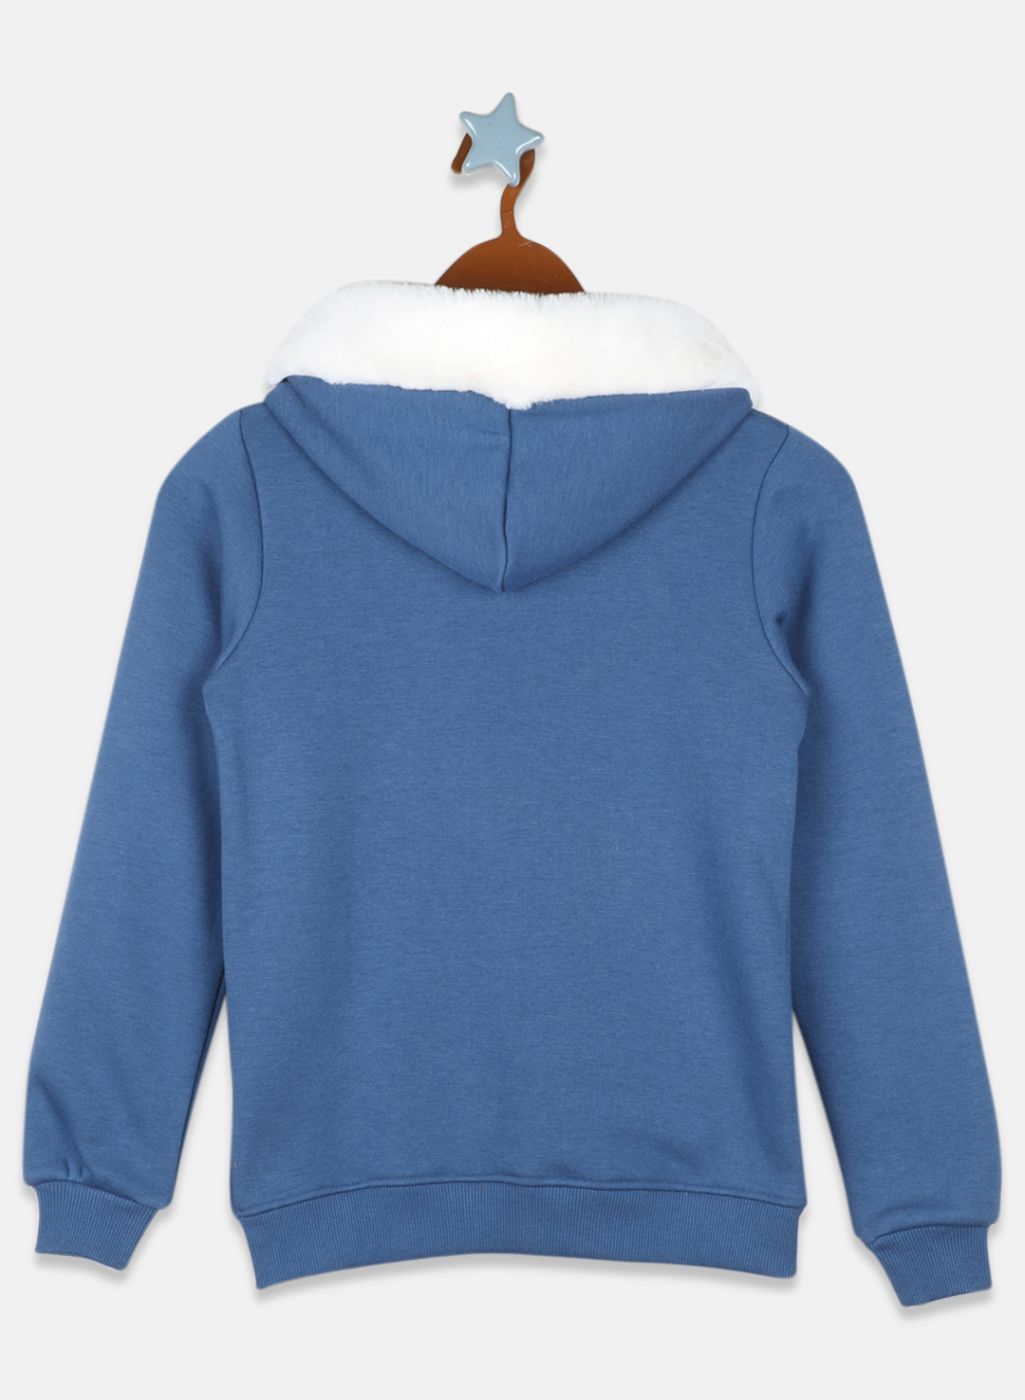 Girls Blue Printed Sweatshirt